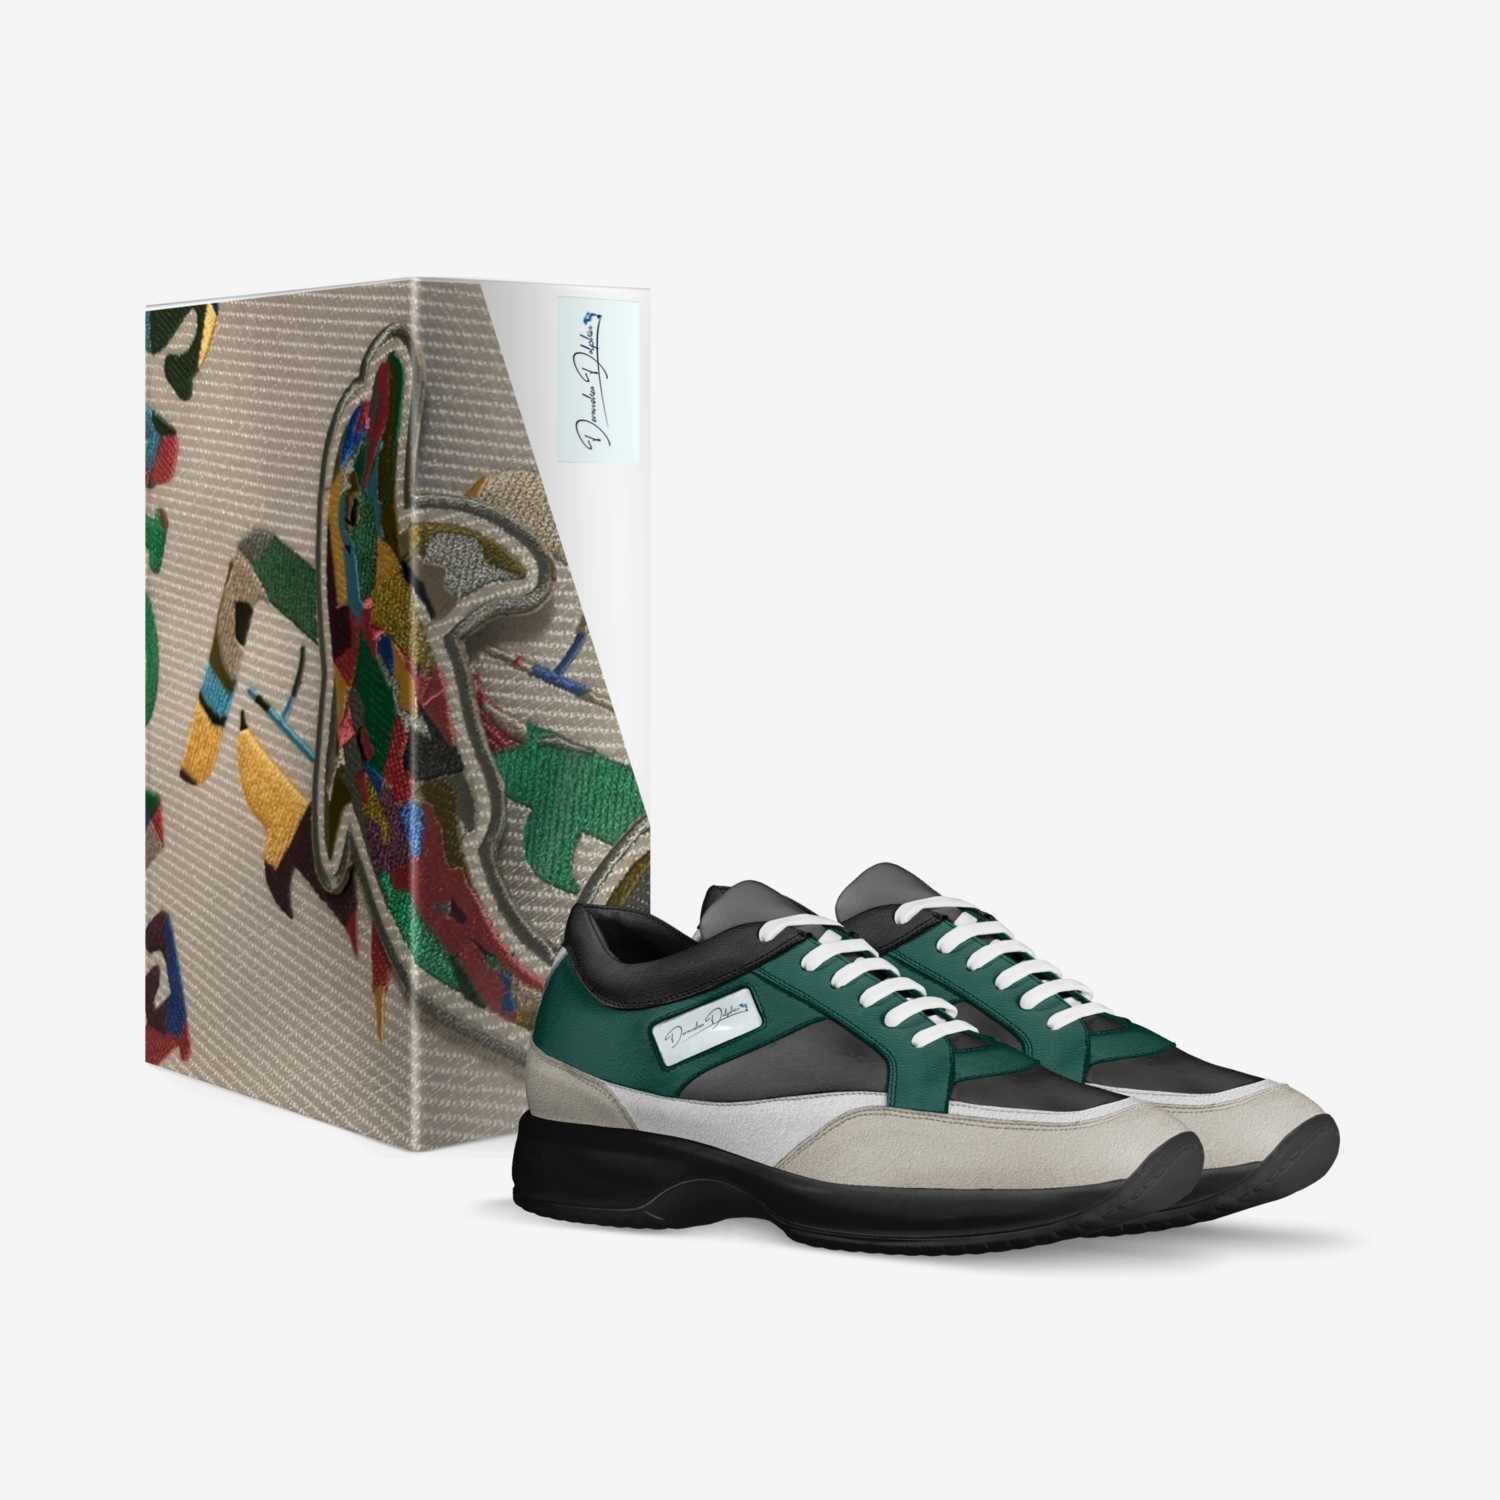 DEVONSHEAS  custom made in Italy shoes by Ladarius Harrell | Box view